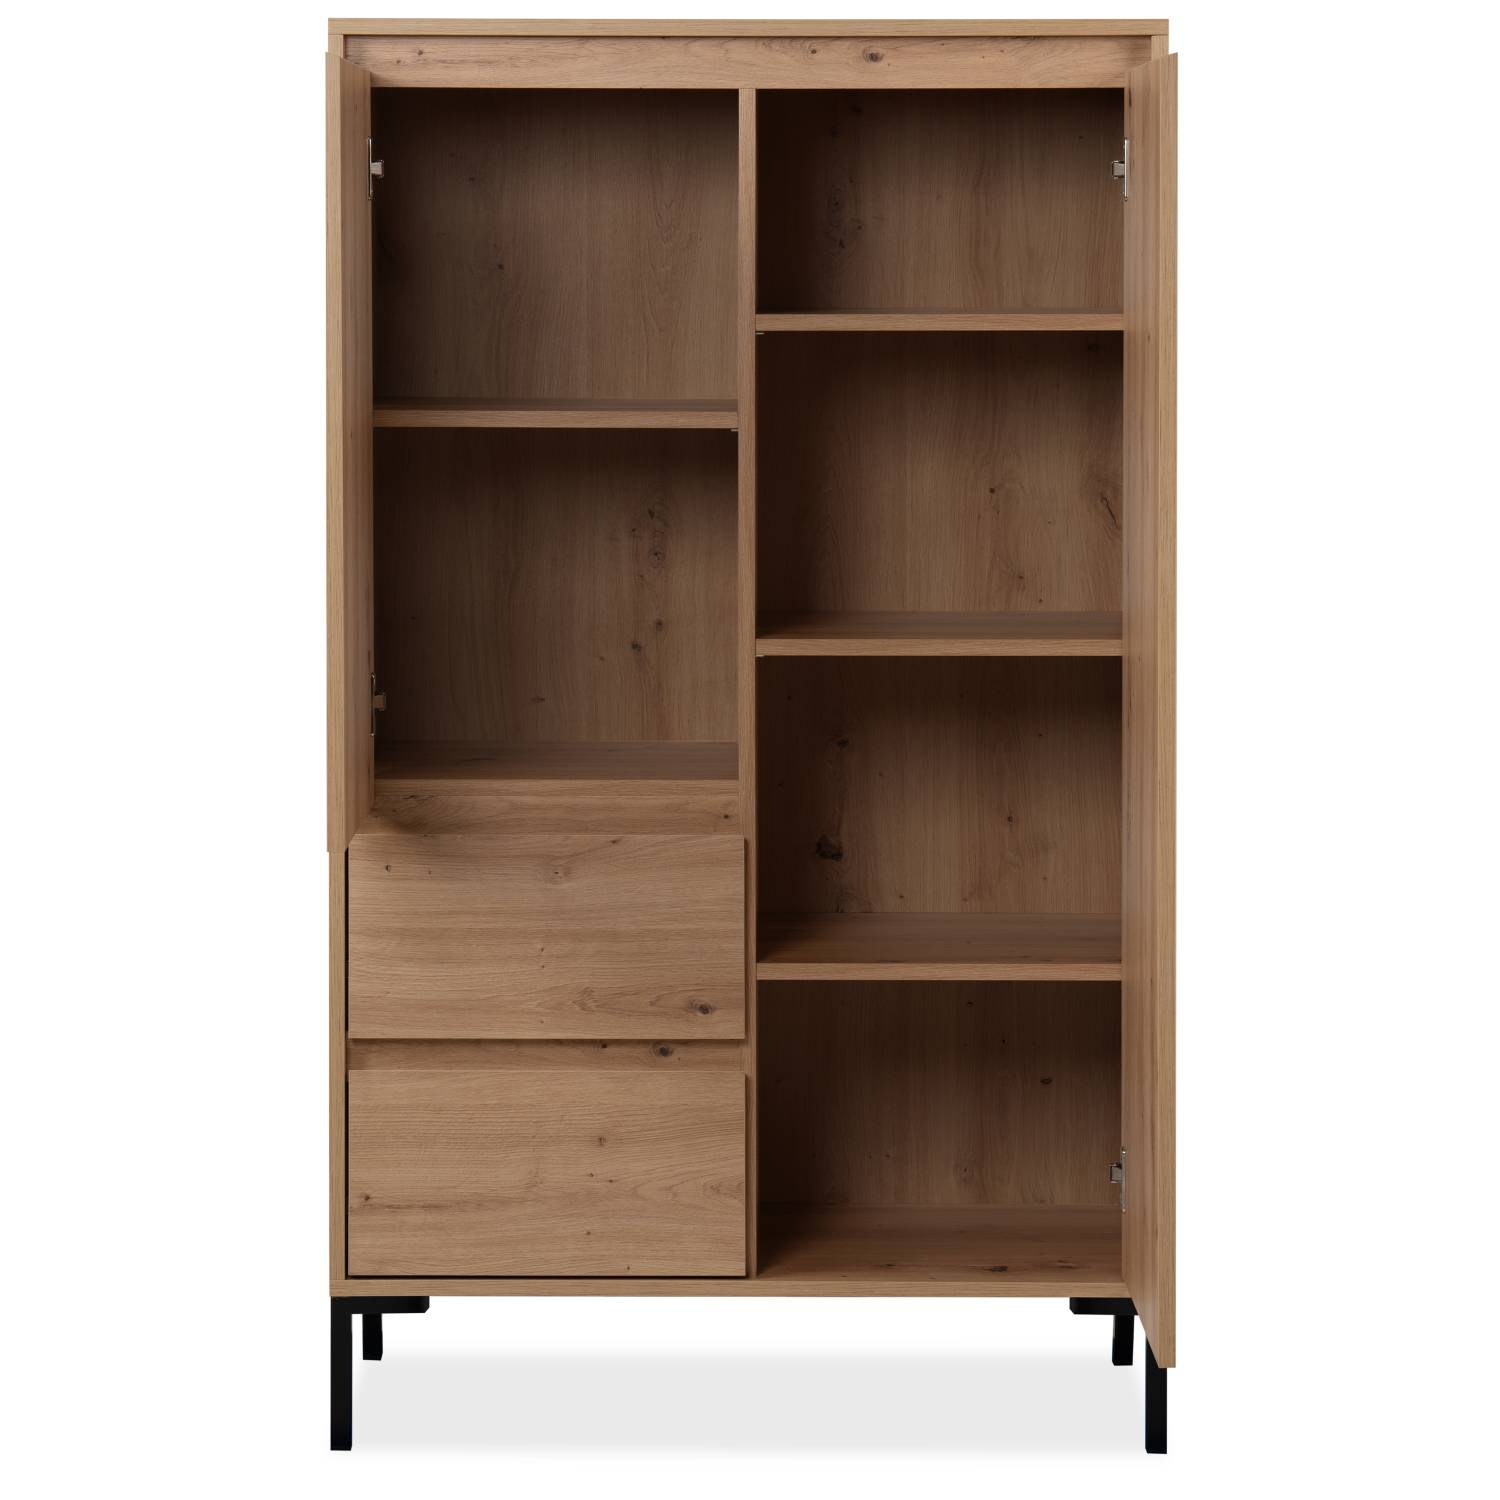 Highboard Sideboard Wood Oak Storage 2 Drawers Cabinet Buffet Credenza Living Room Cupboard